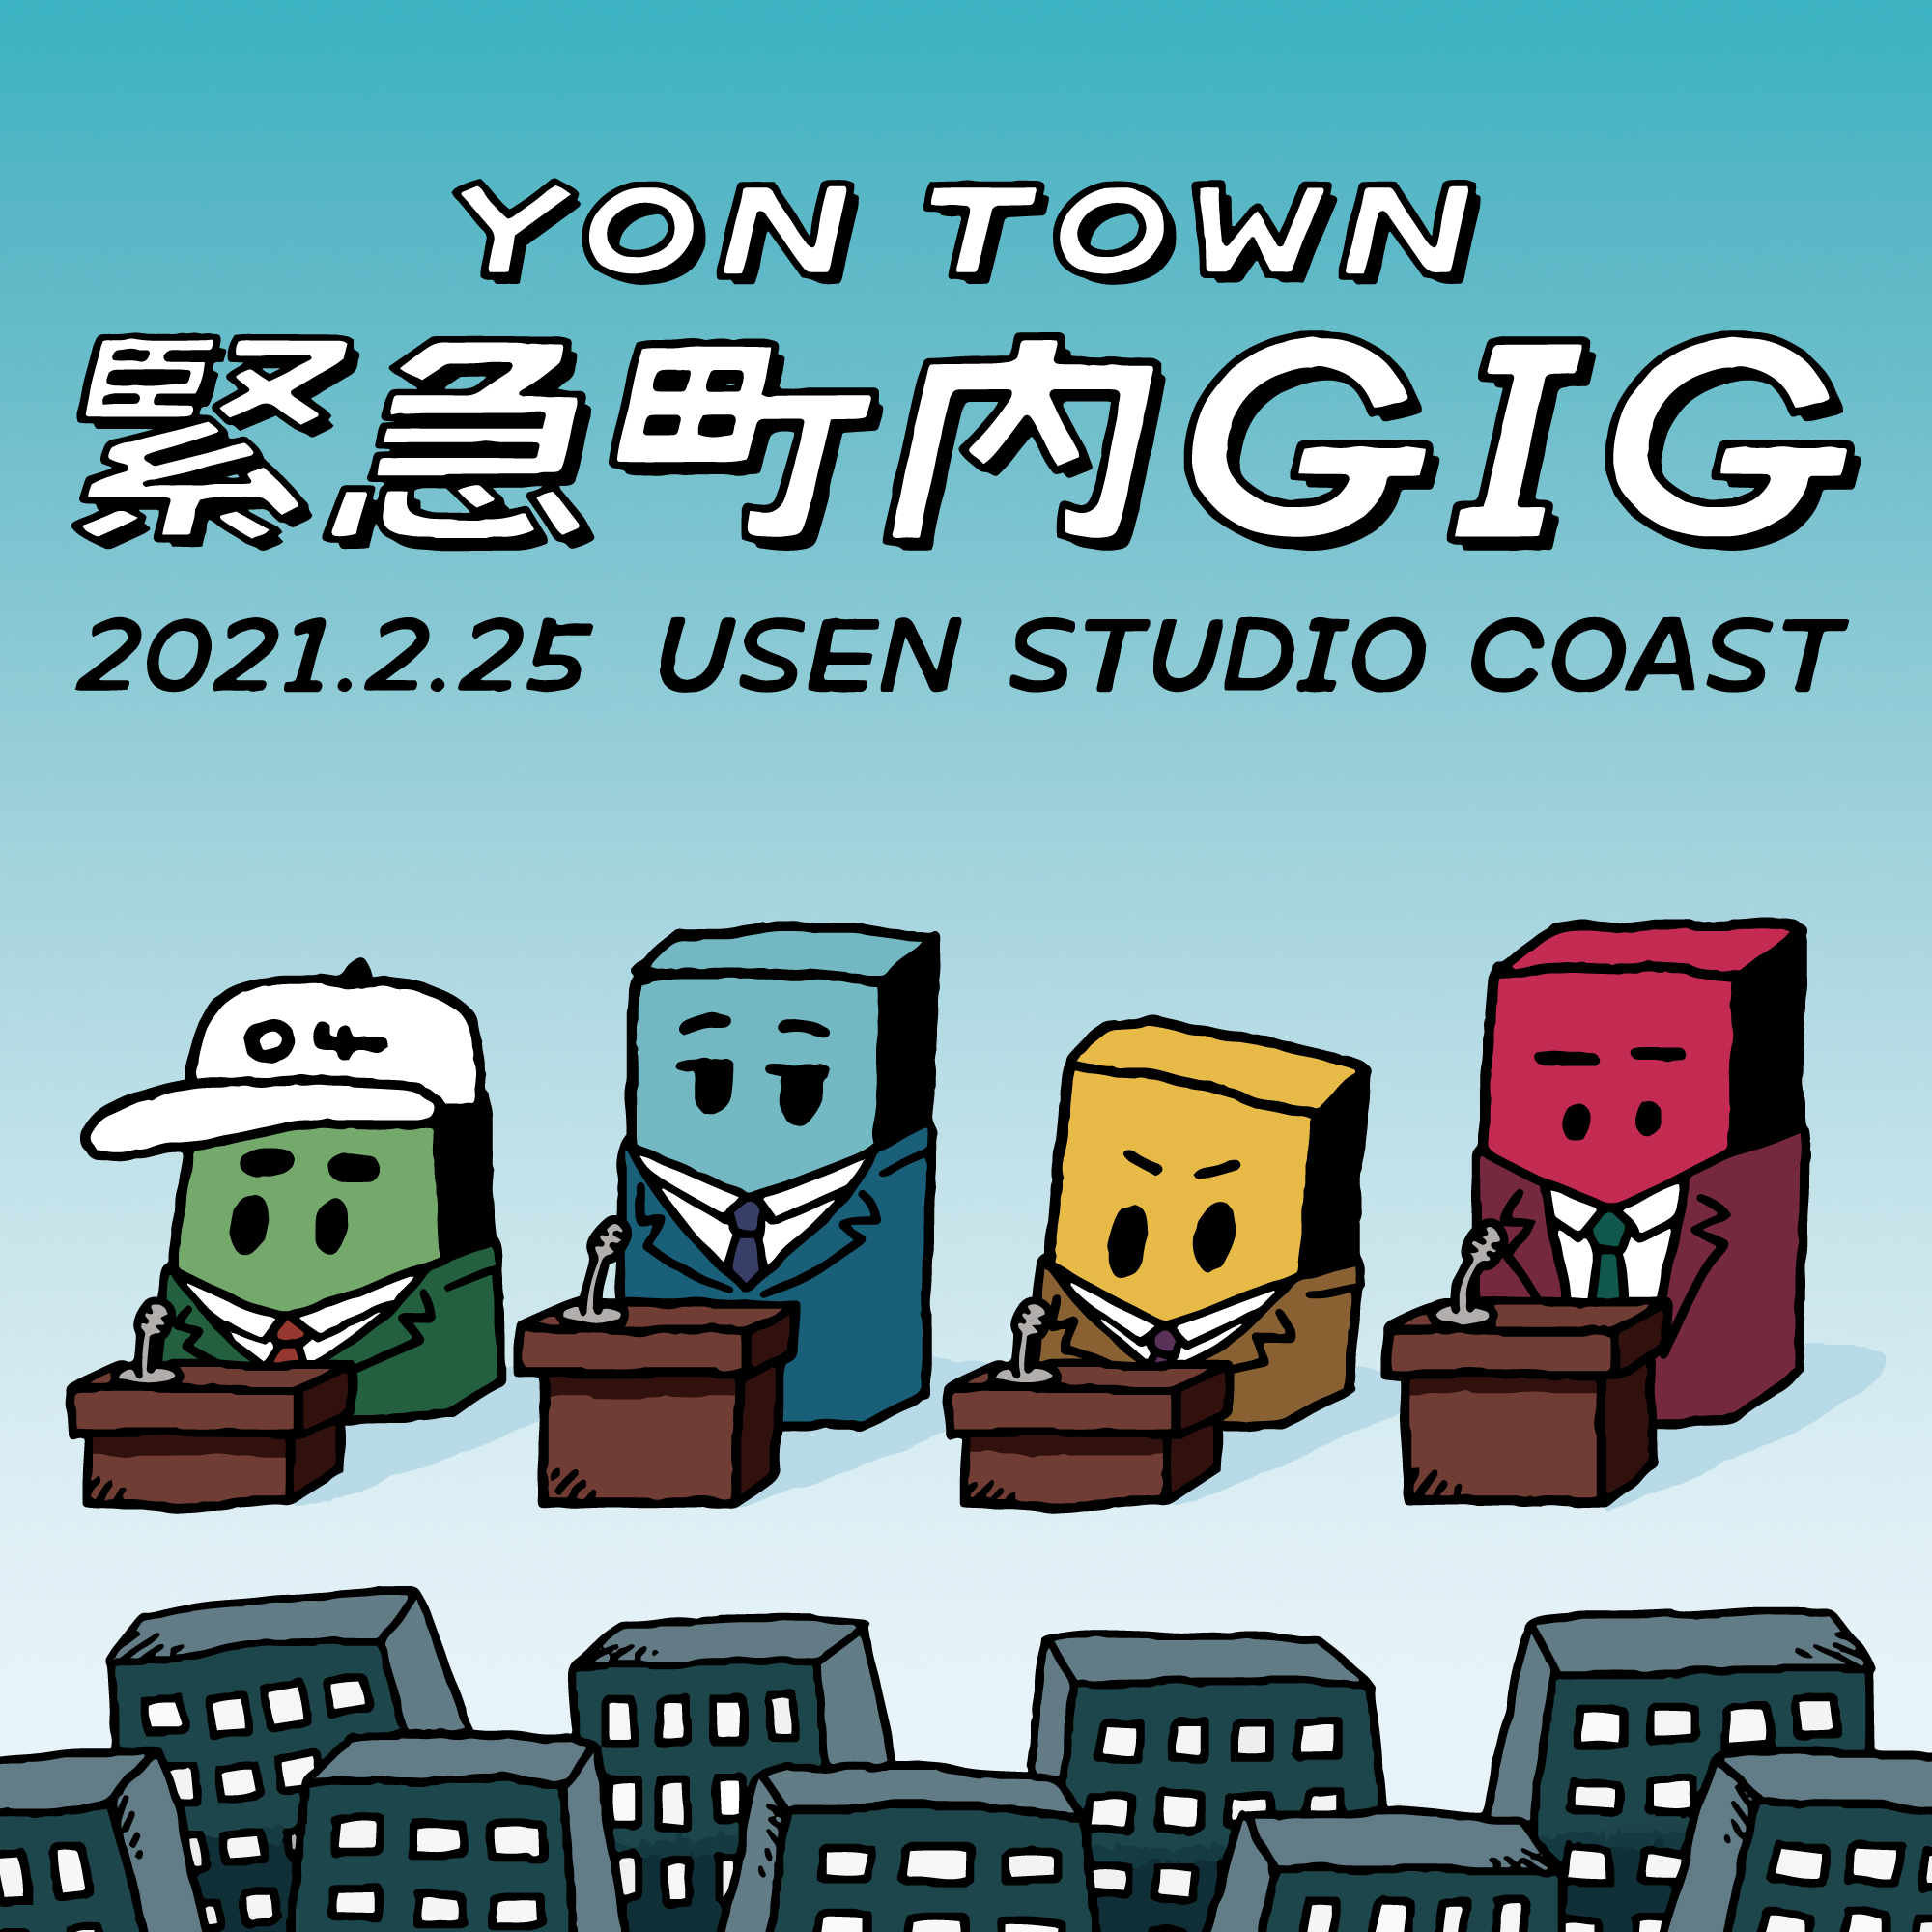 【東京】YON TOWN 緊急町内GIG (USEN STUDIO COAST)